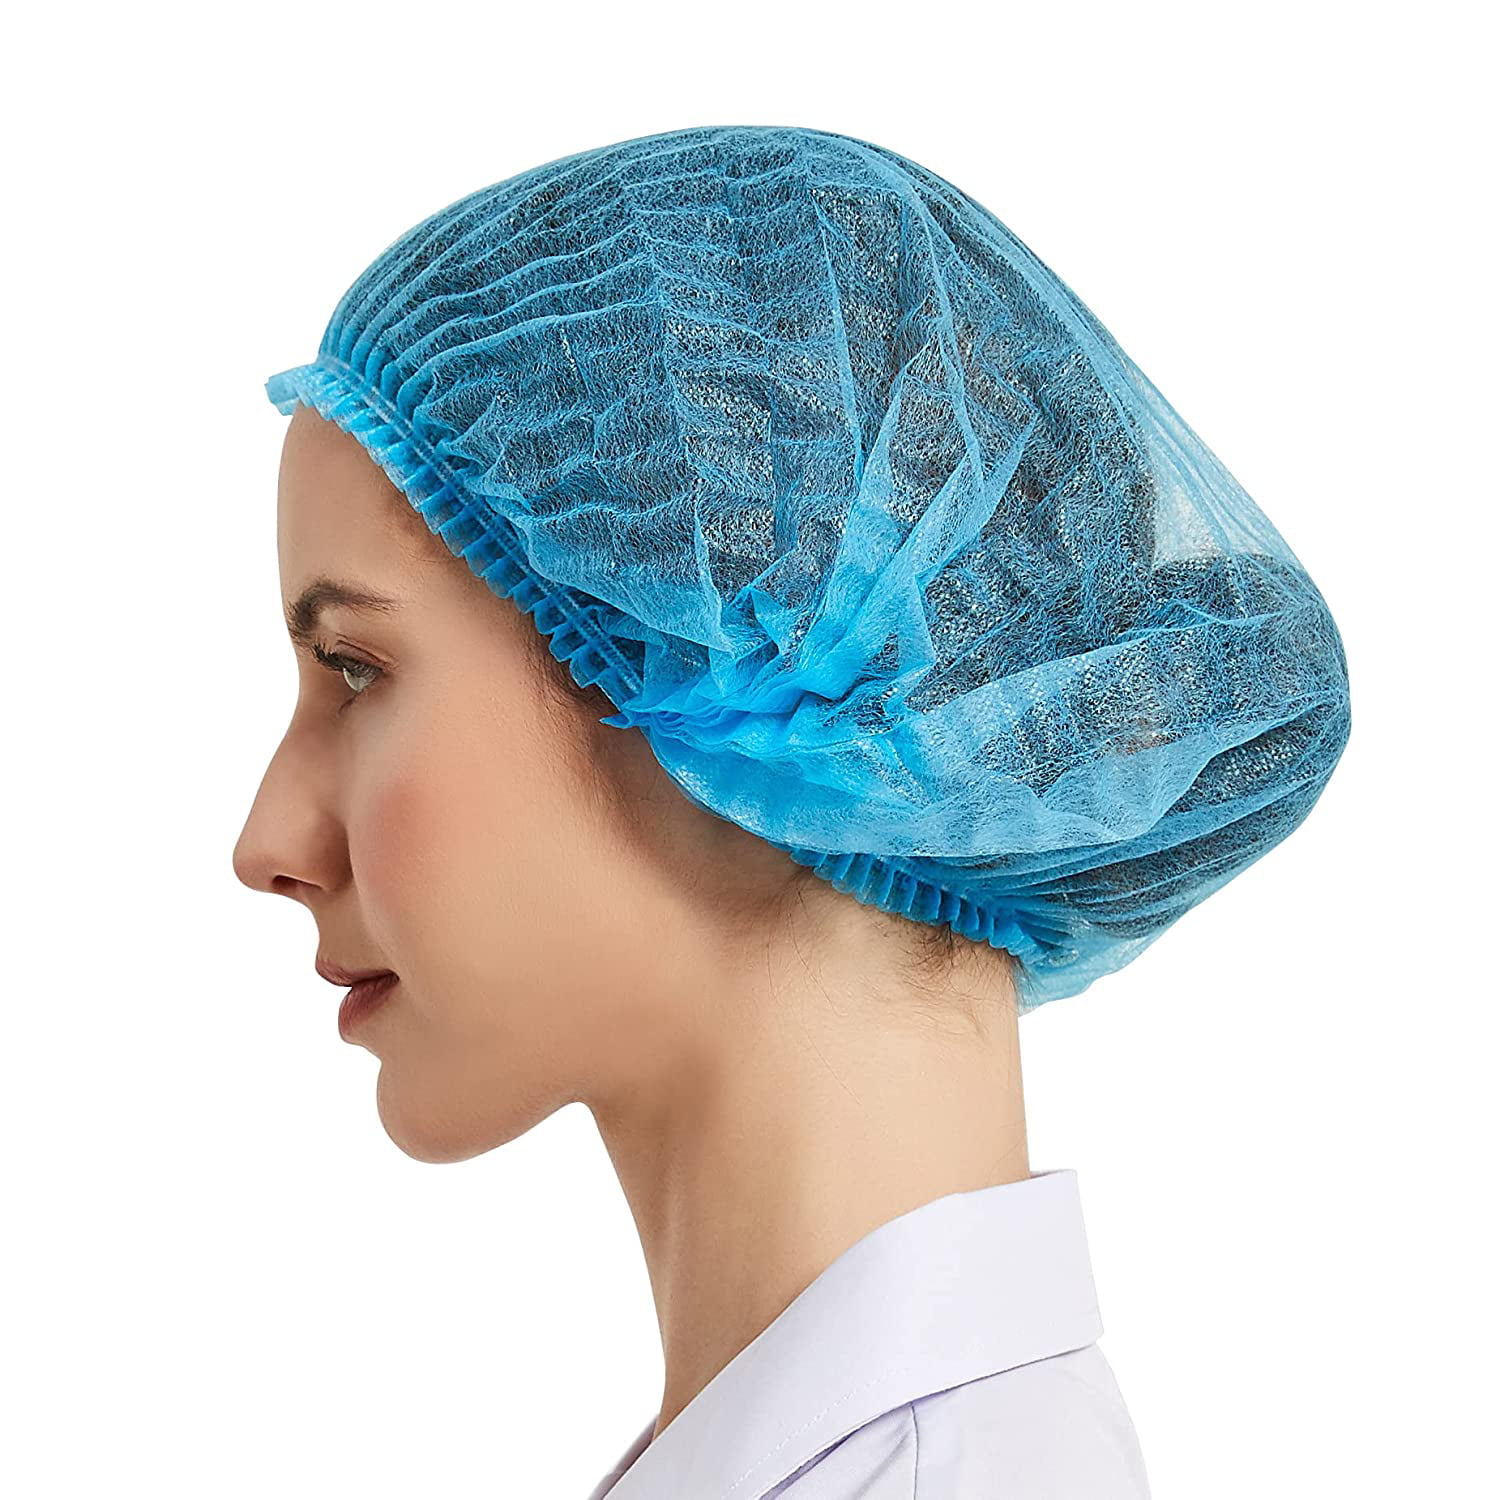 Hair Net ProtectX Disposable Bouffant White 500 pack Caps Hair Head Cover Nets 21”